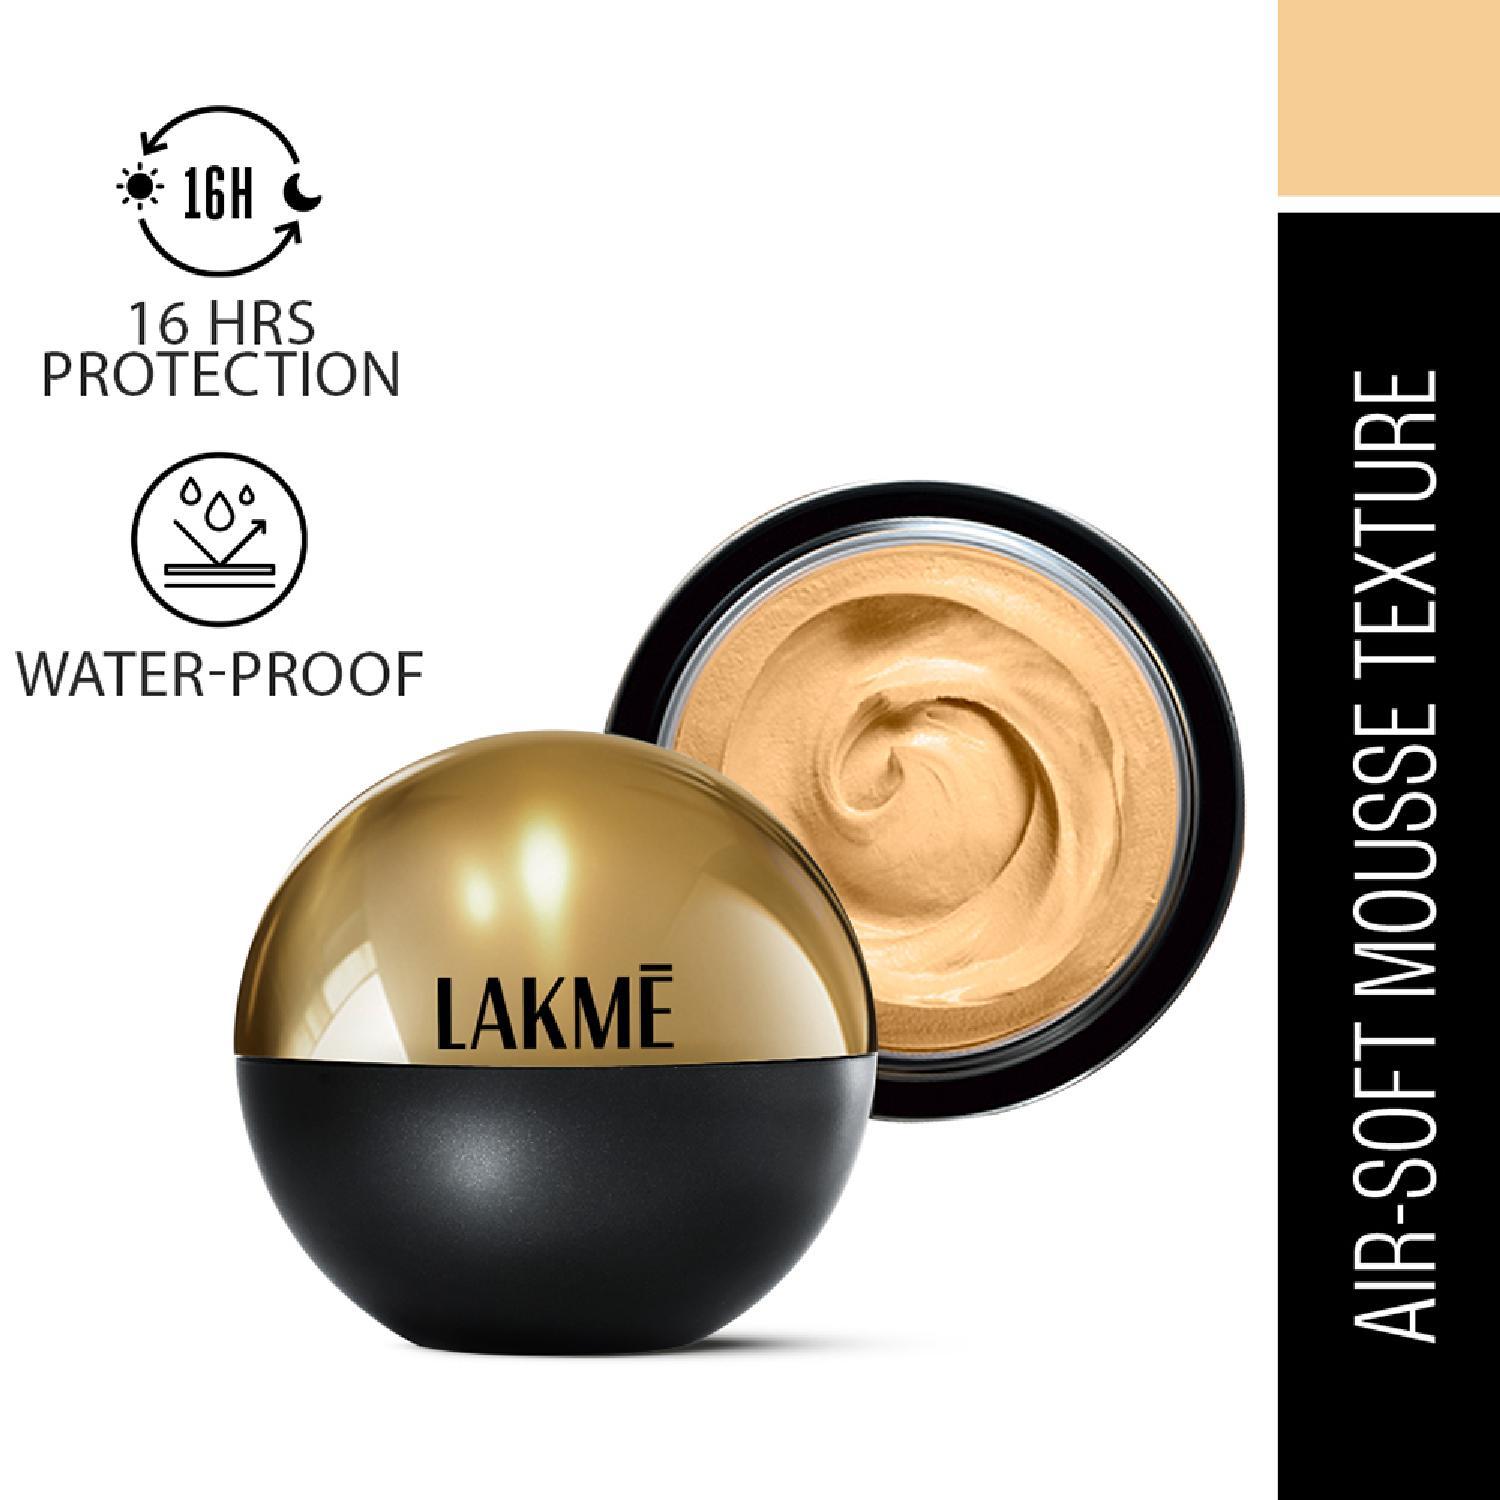 Lakme | Lakme Xtraordin-airy Mattereal Mousse Foundation, 04 Golden Light (25 g)